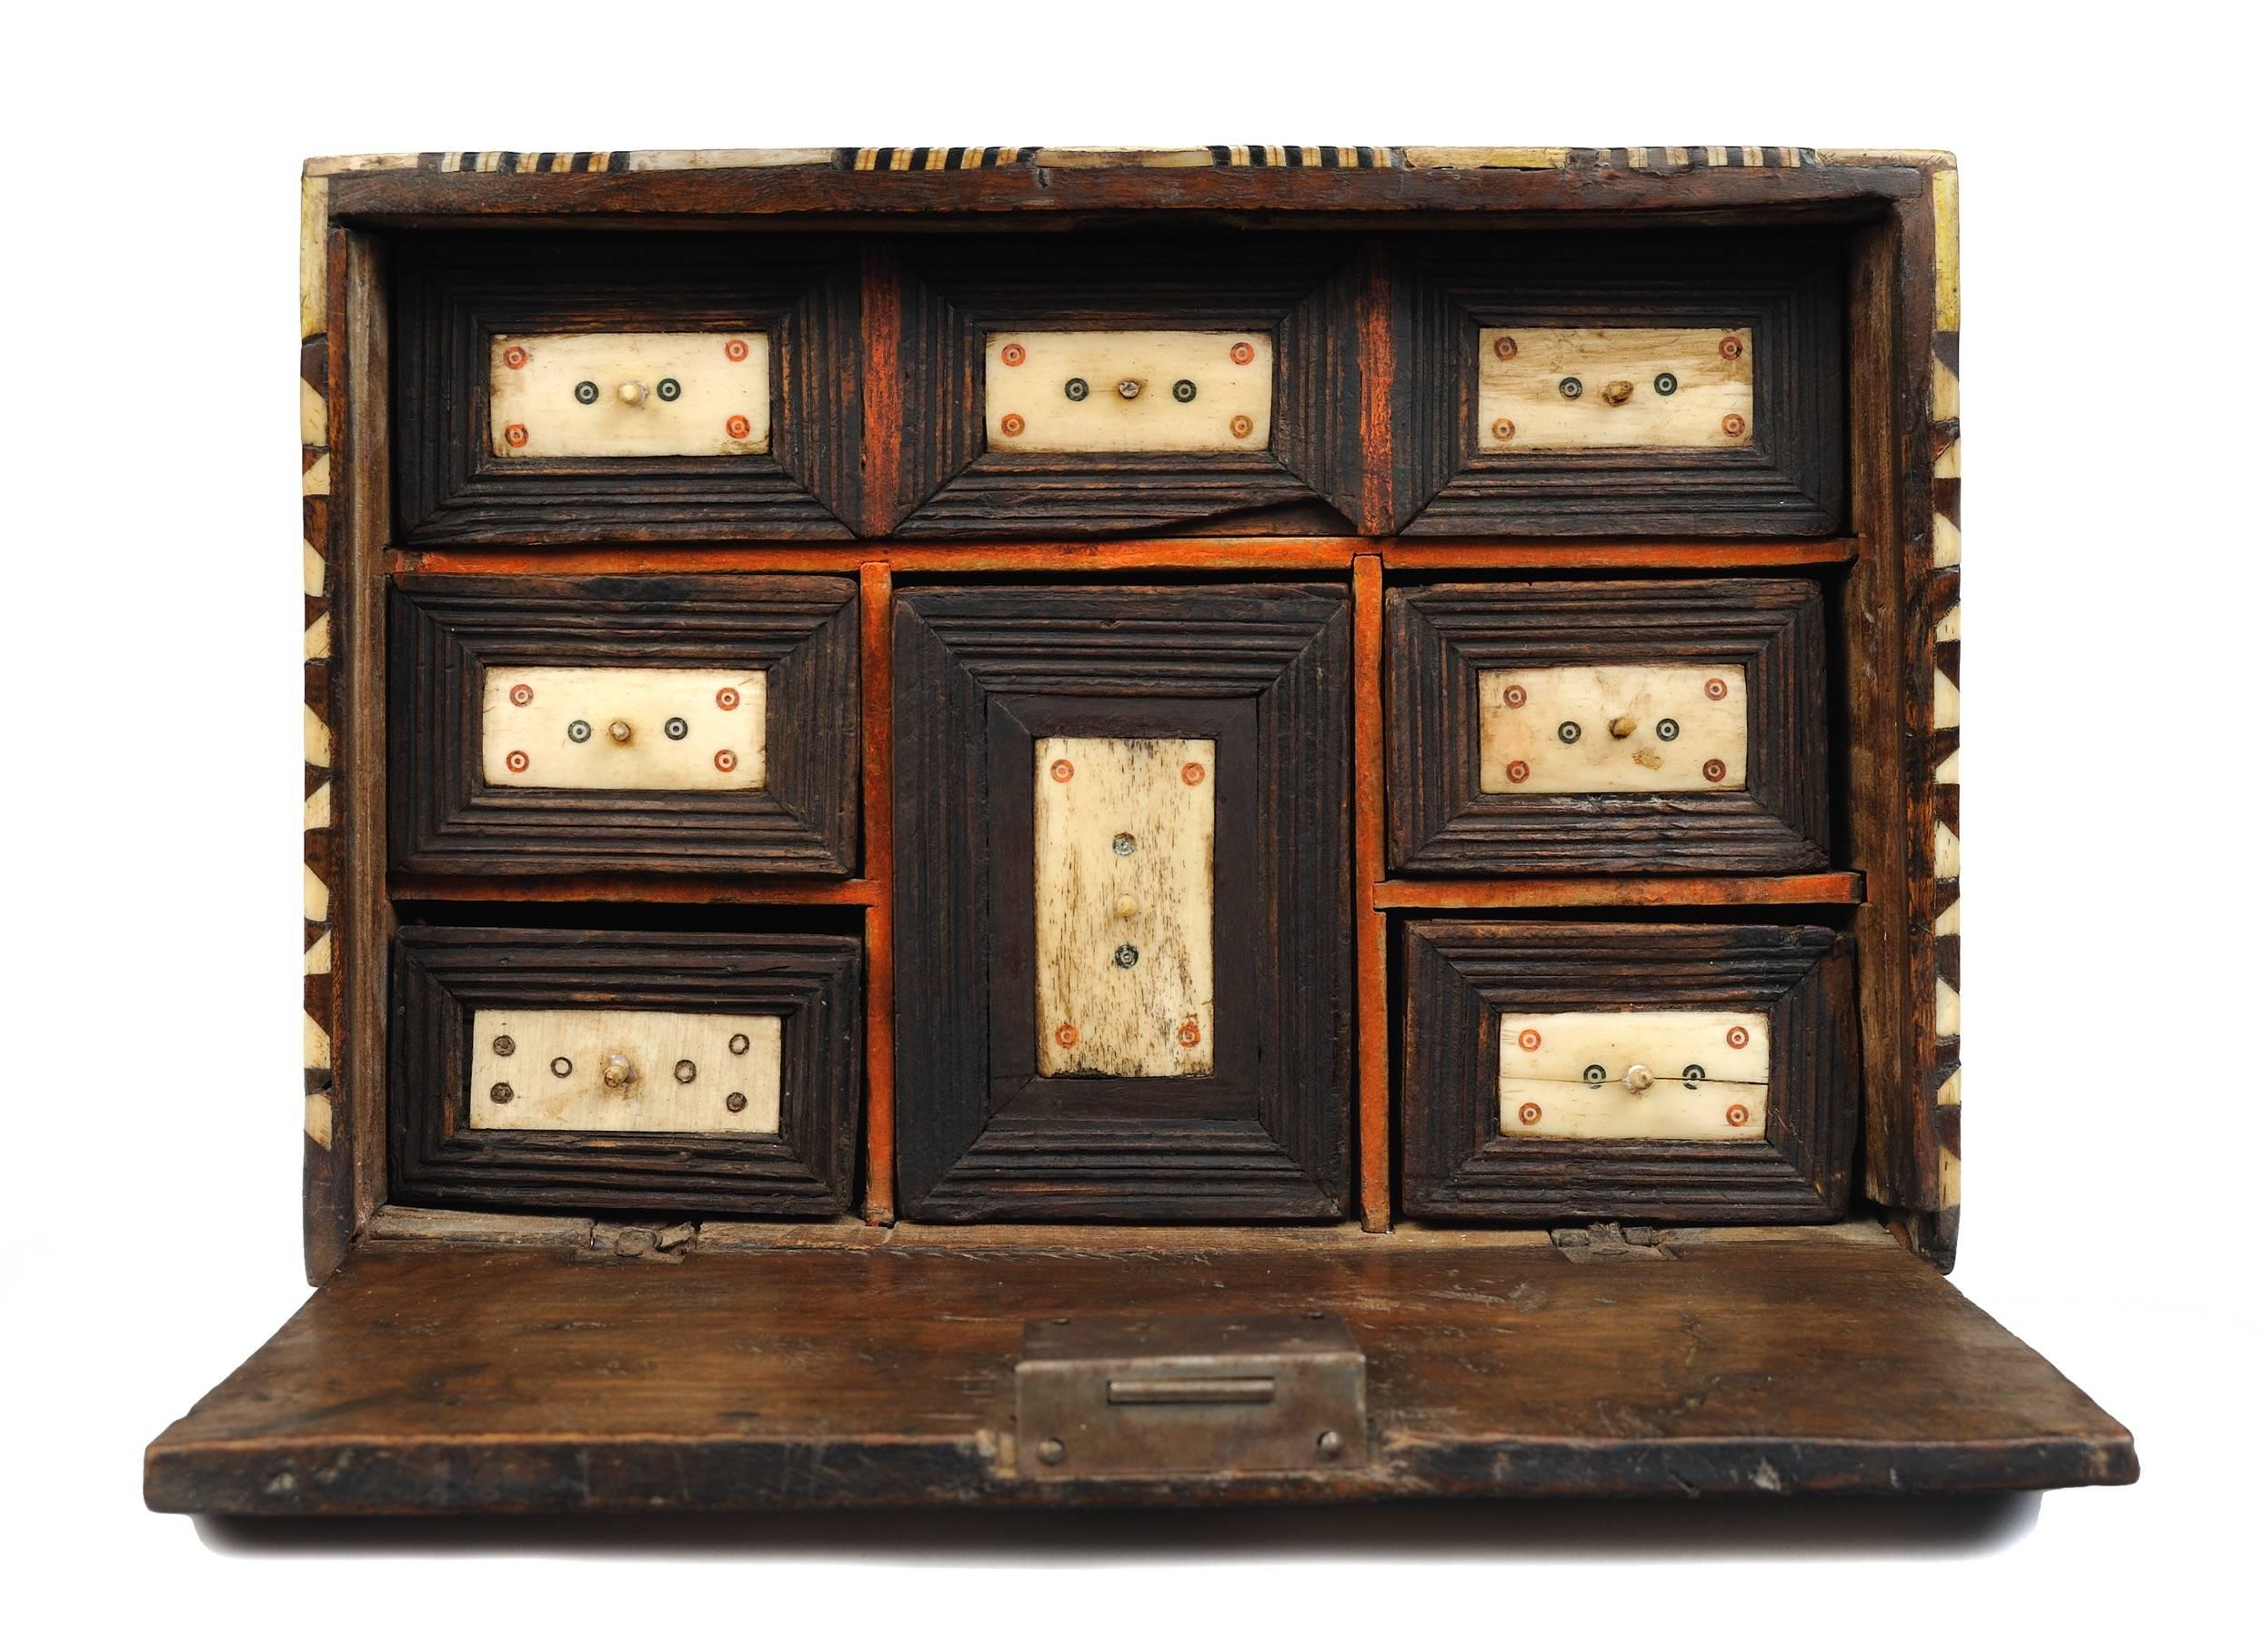 17th century Alto Plano traveling desk
Peru or Bolivia, circa 1680
Rosewood and bone
Measure: 9 x 13 x 9.5 inches.